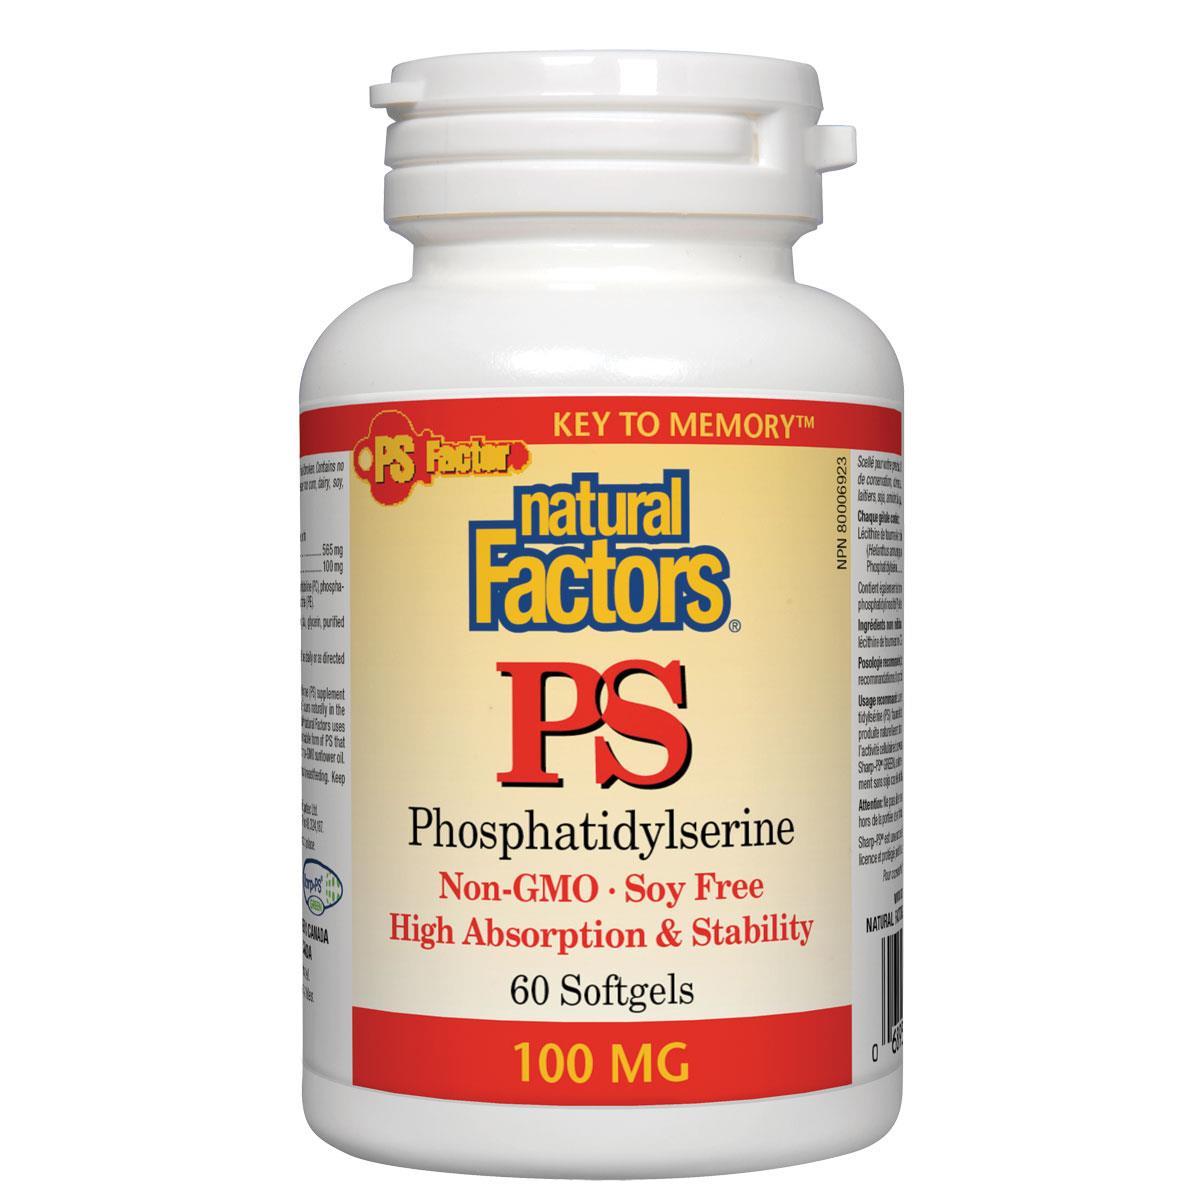 Natural Factors PS Phosphatidylserine, 100mg, 60 Softgels